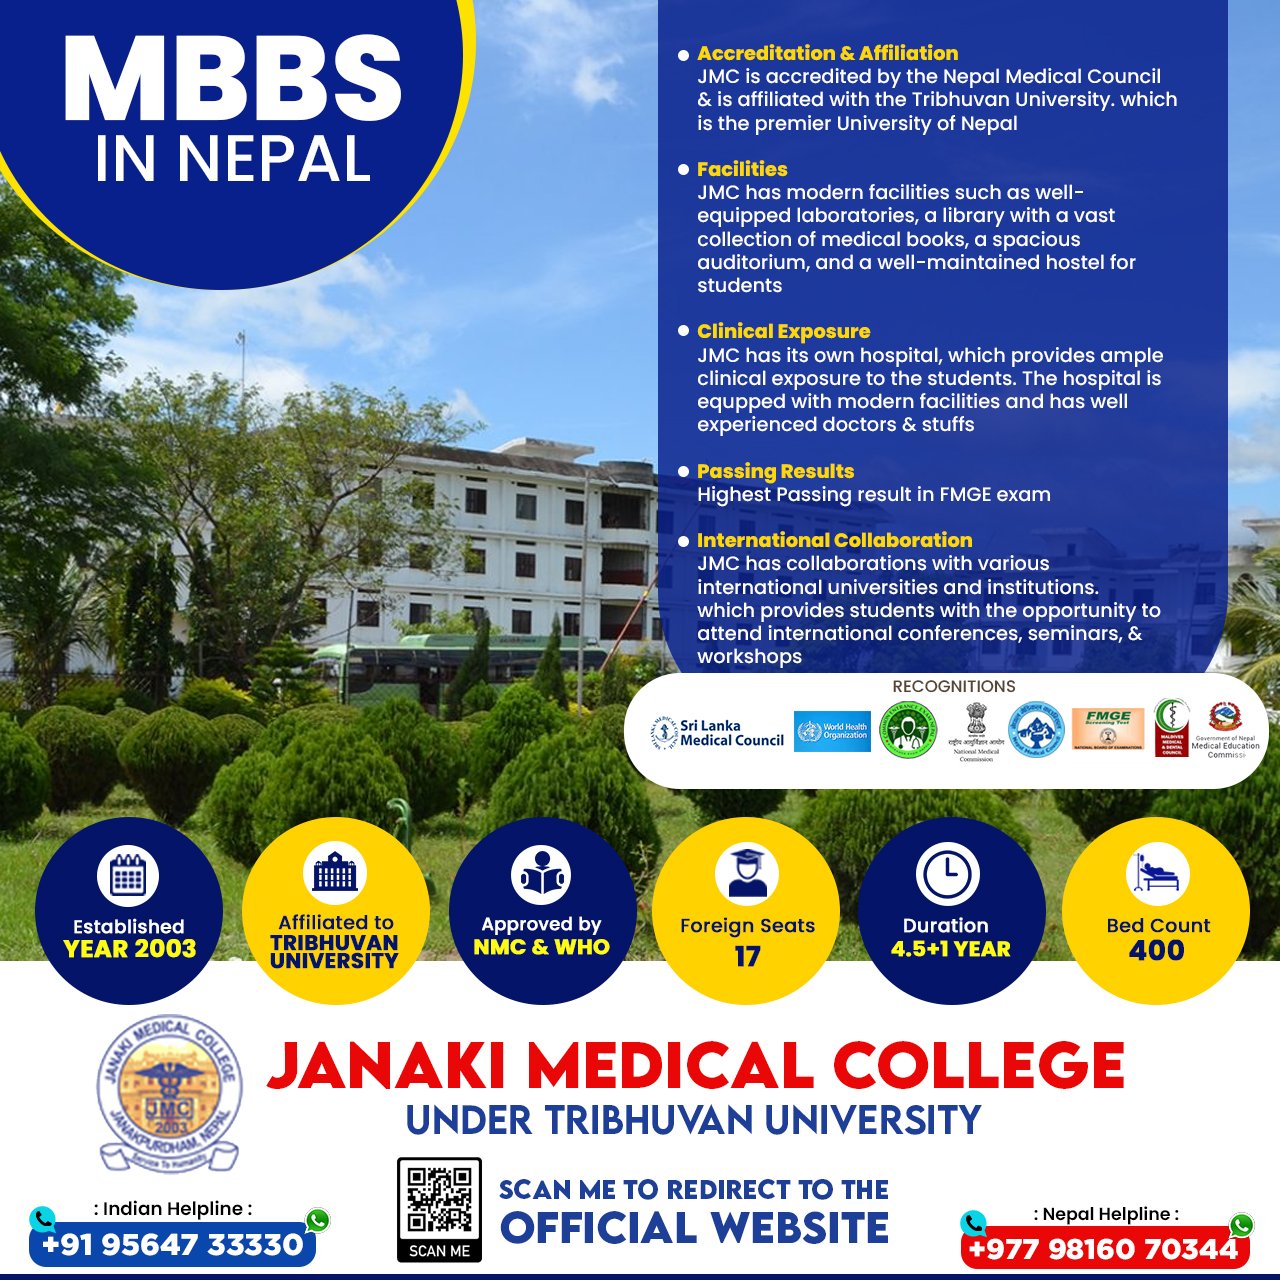 mbbs-in-nepal-at-janaki-medical-college-under-tribhuvan-university